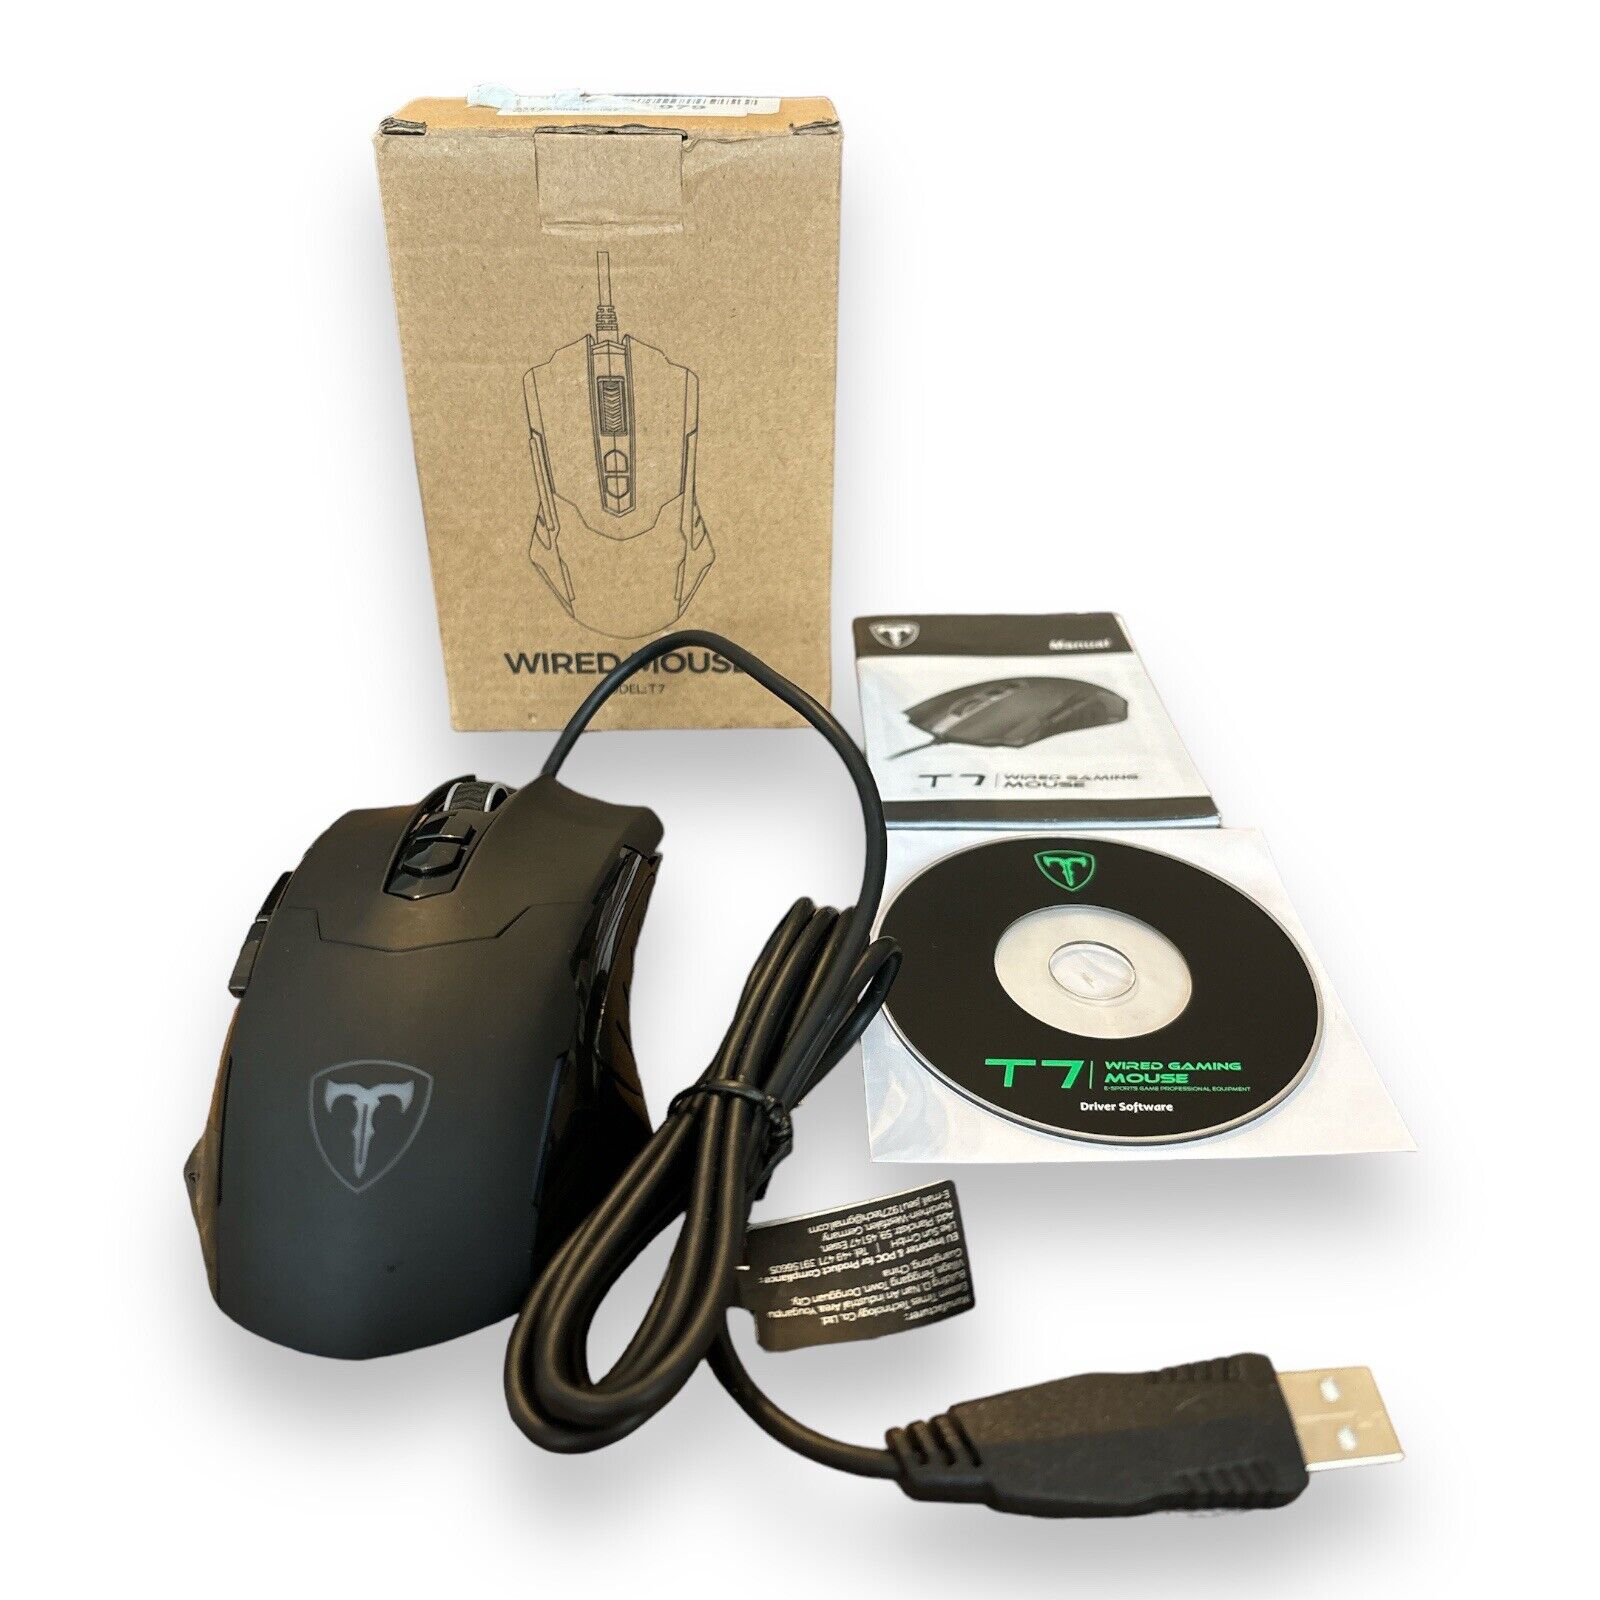 PICTEK Wired Mouse Model T7 (Black) BRAND NEW